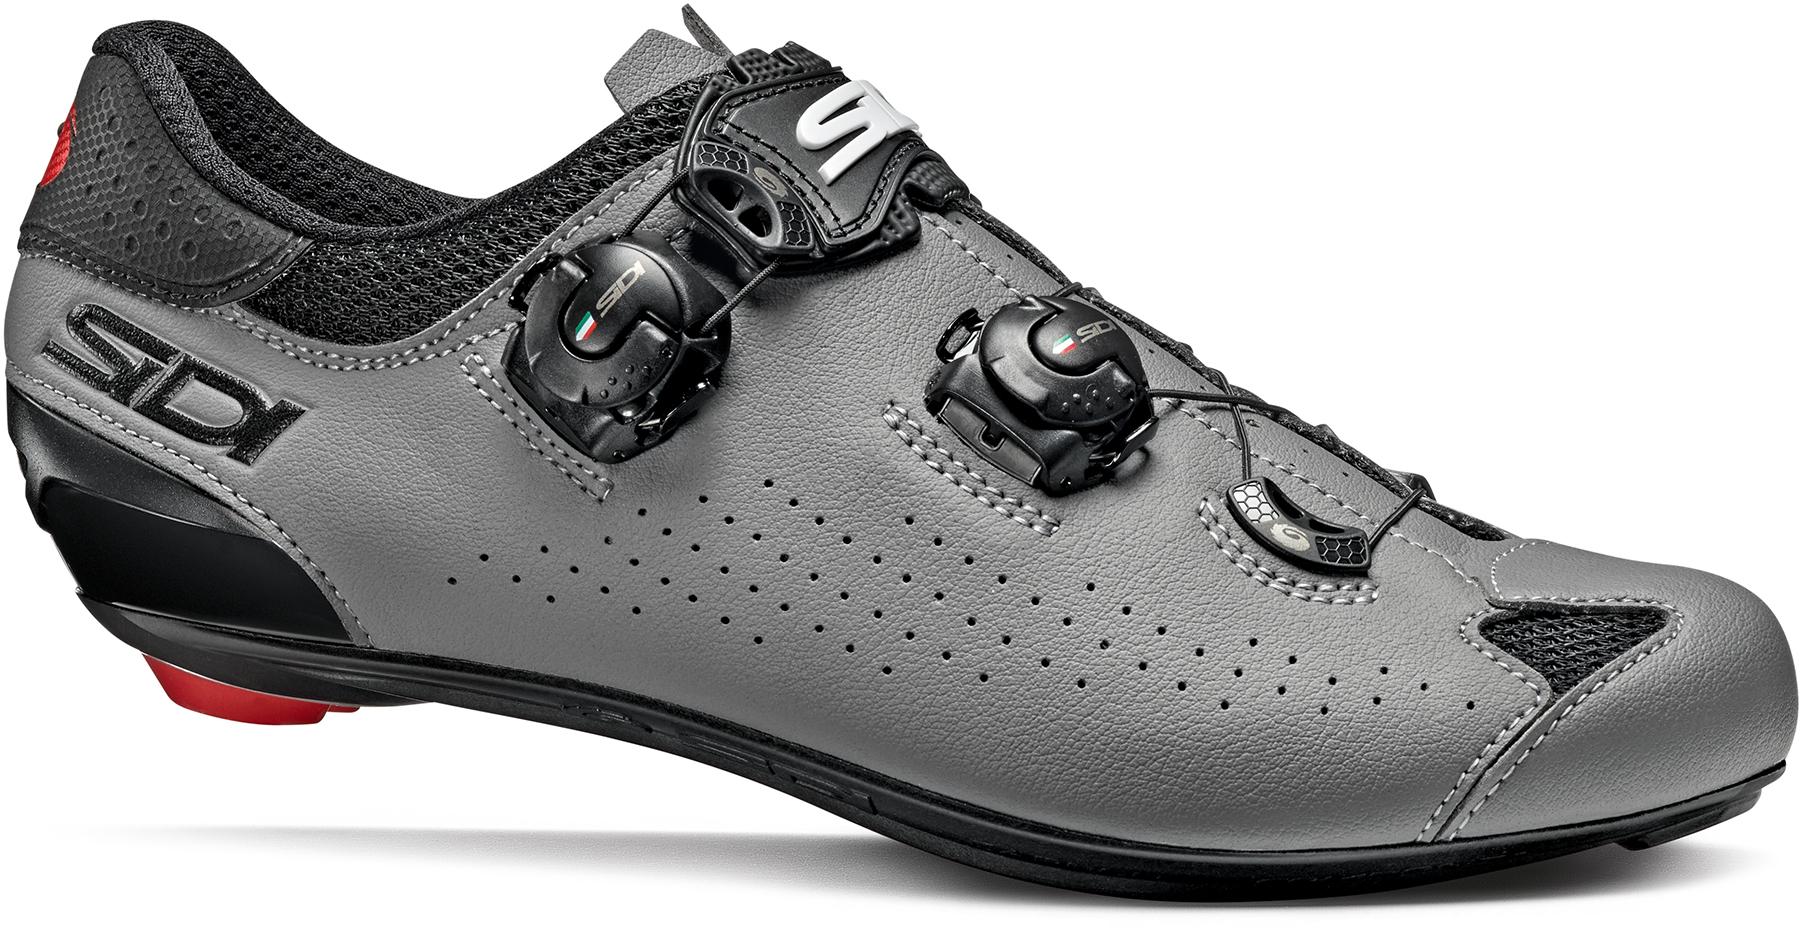 Sidi Genius 10 Road Cycling Shoes - Black/grey